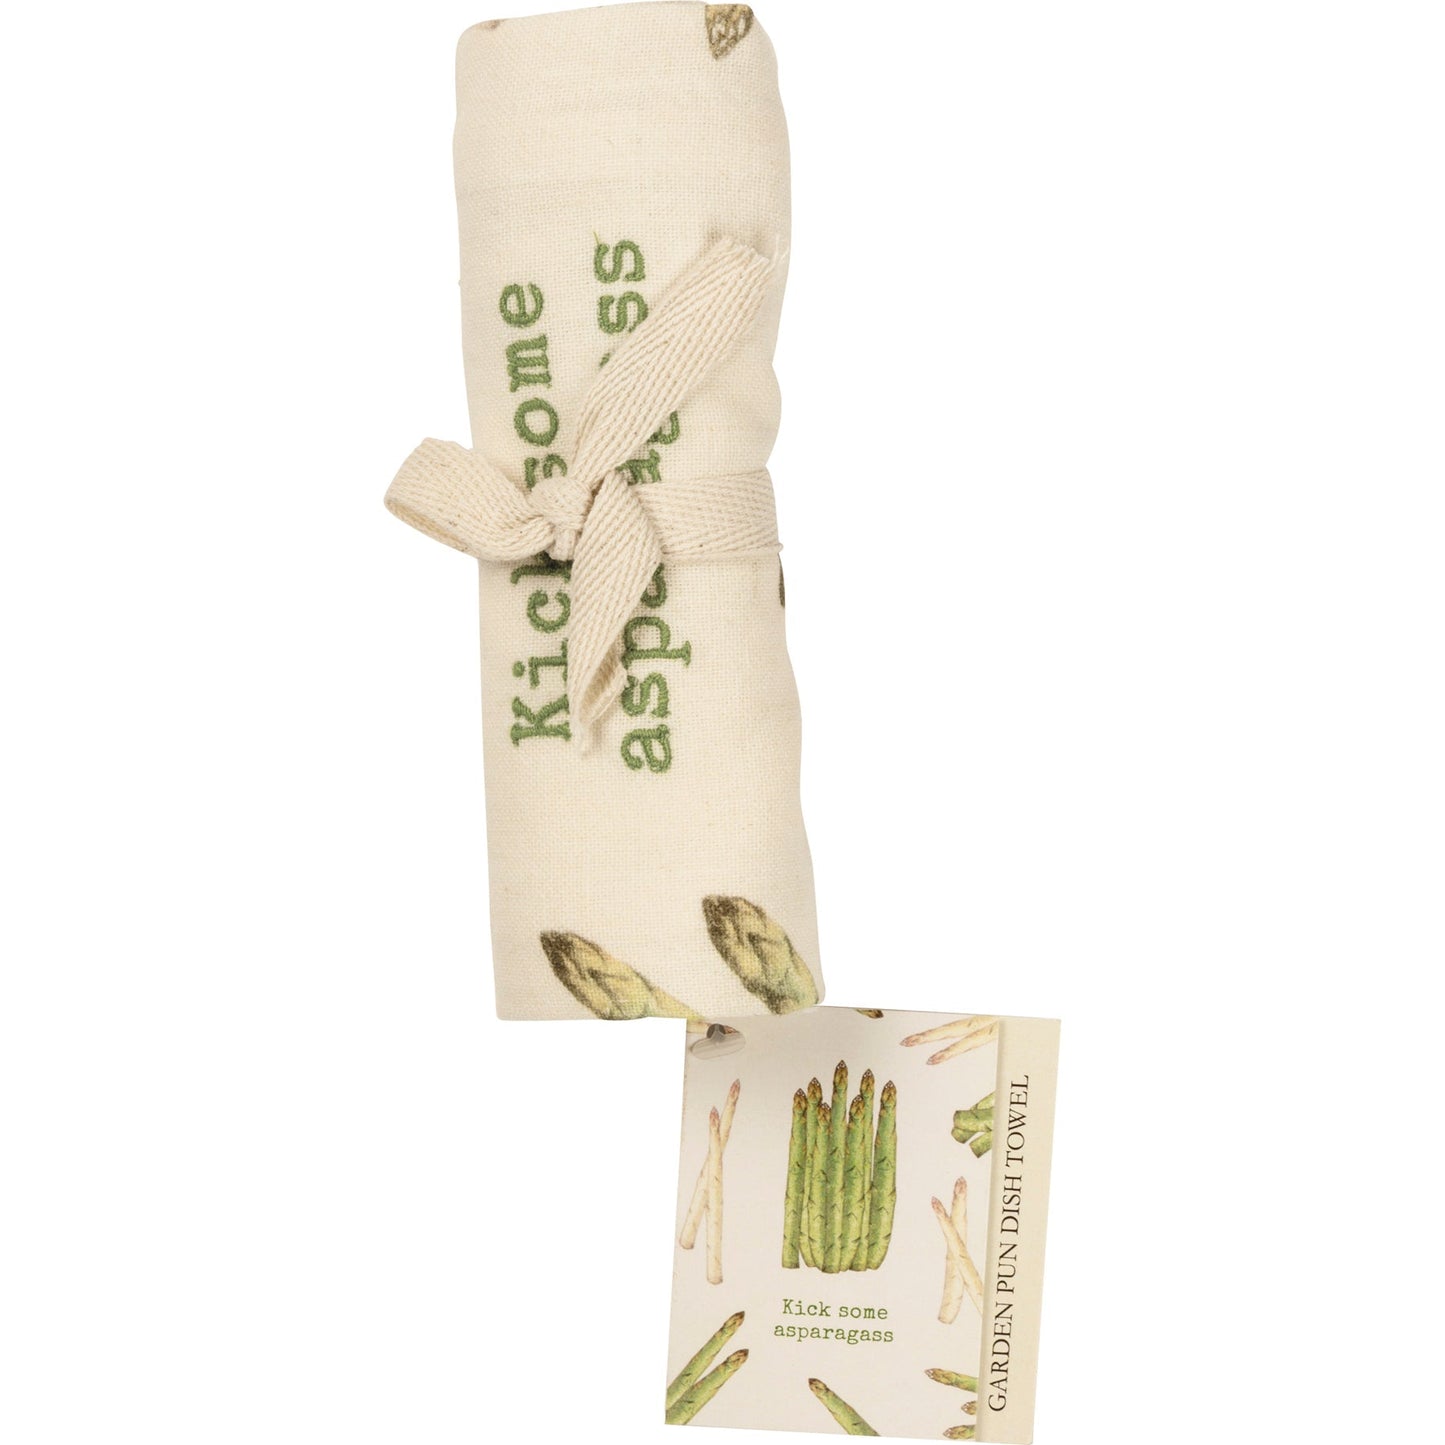 Kick Some Asparagass Dish Cloth Towel | Cotten Linen Novelty Tea Towel | Embroidered Text | 18" x 28"